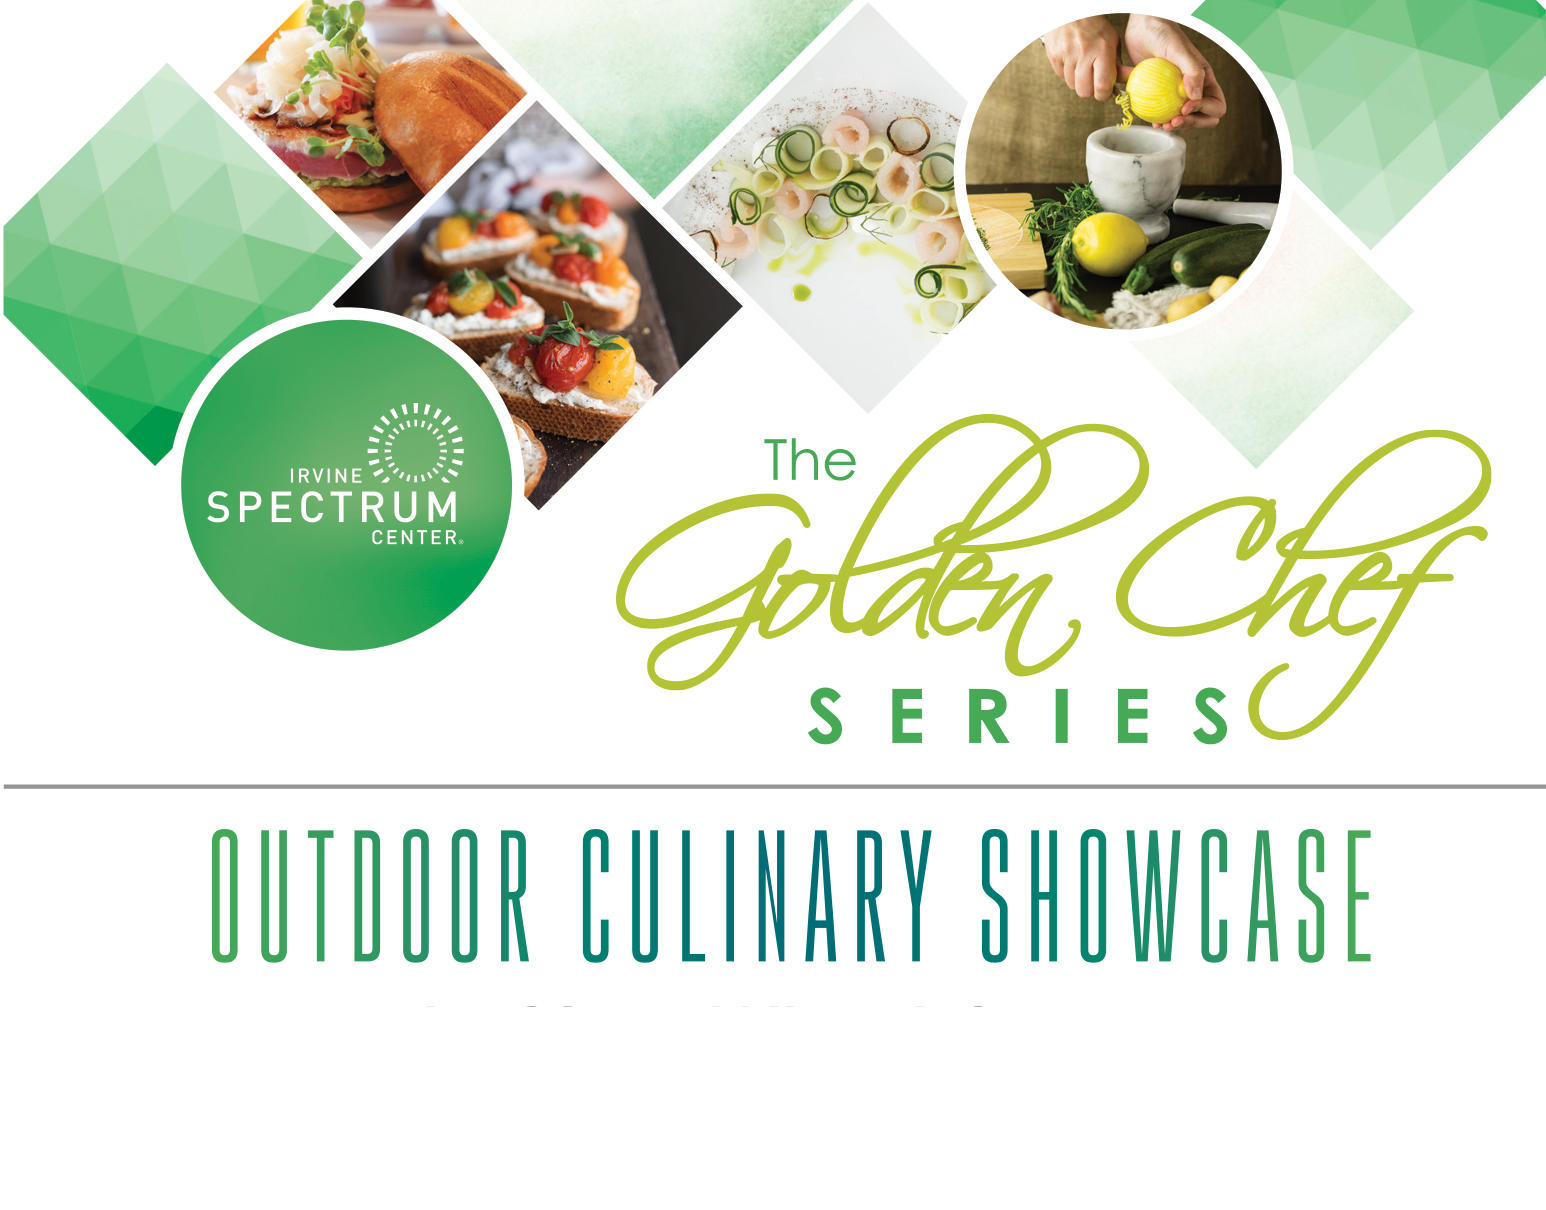 The Golden Chef Series at Irvine Spectrum Center